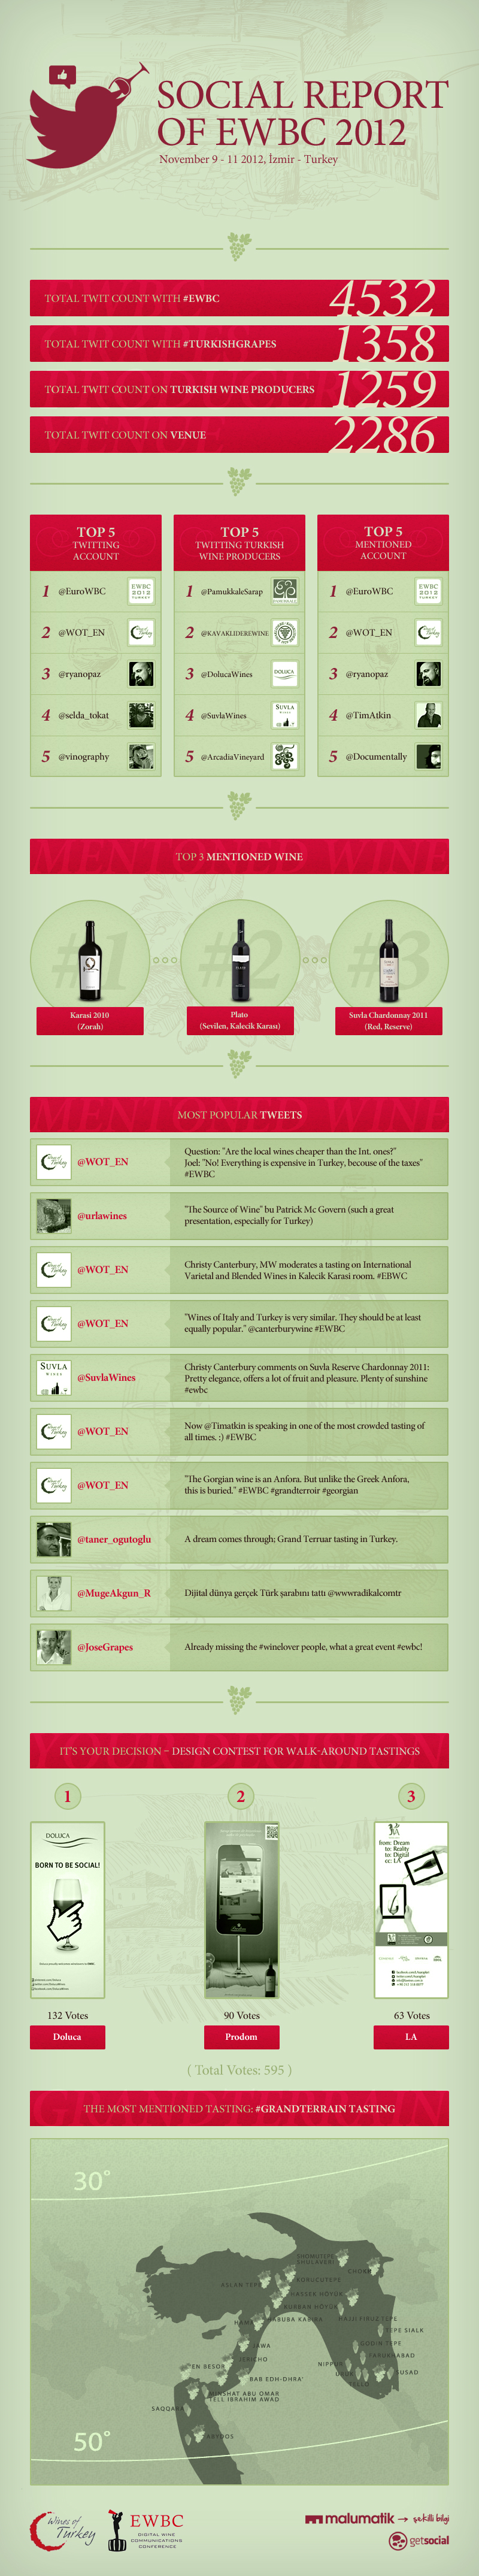 Infographic Social Report of EWBC 2012